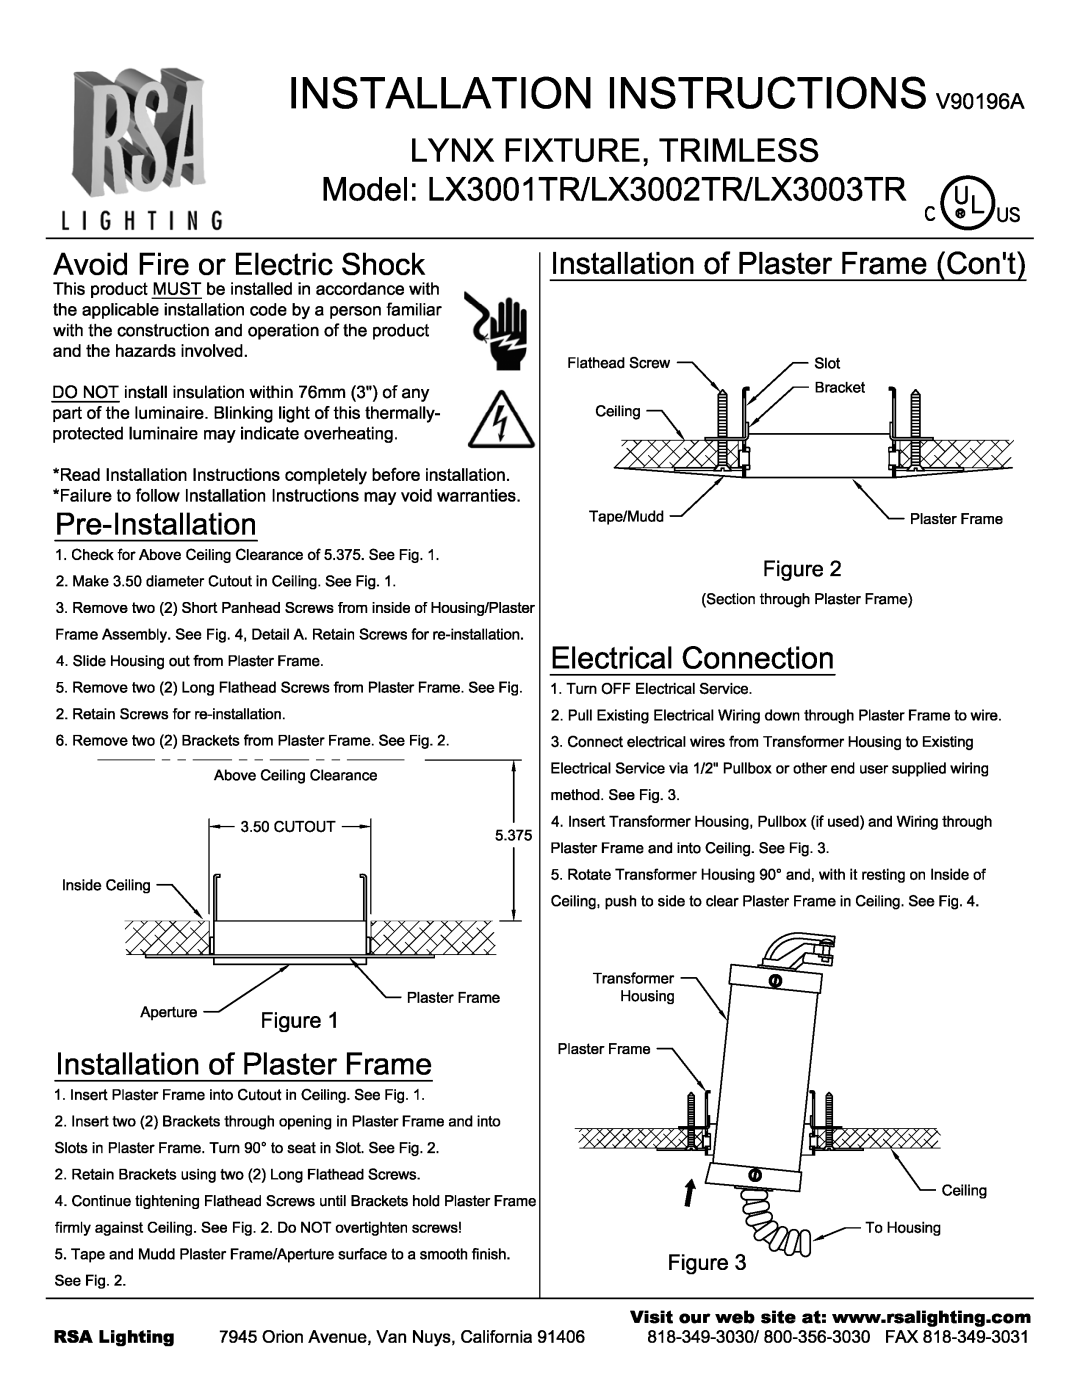 Cooper Lighting LX3002TR, LX3003TR manual 